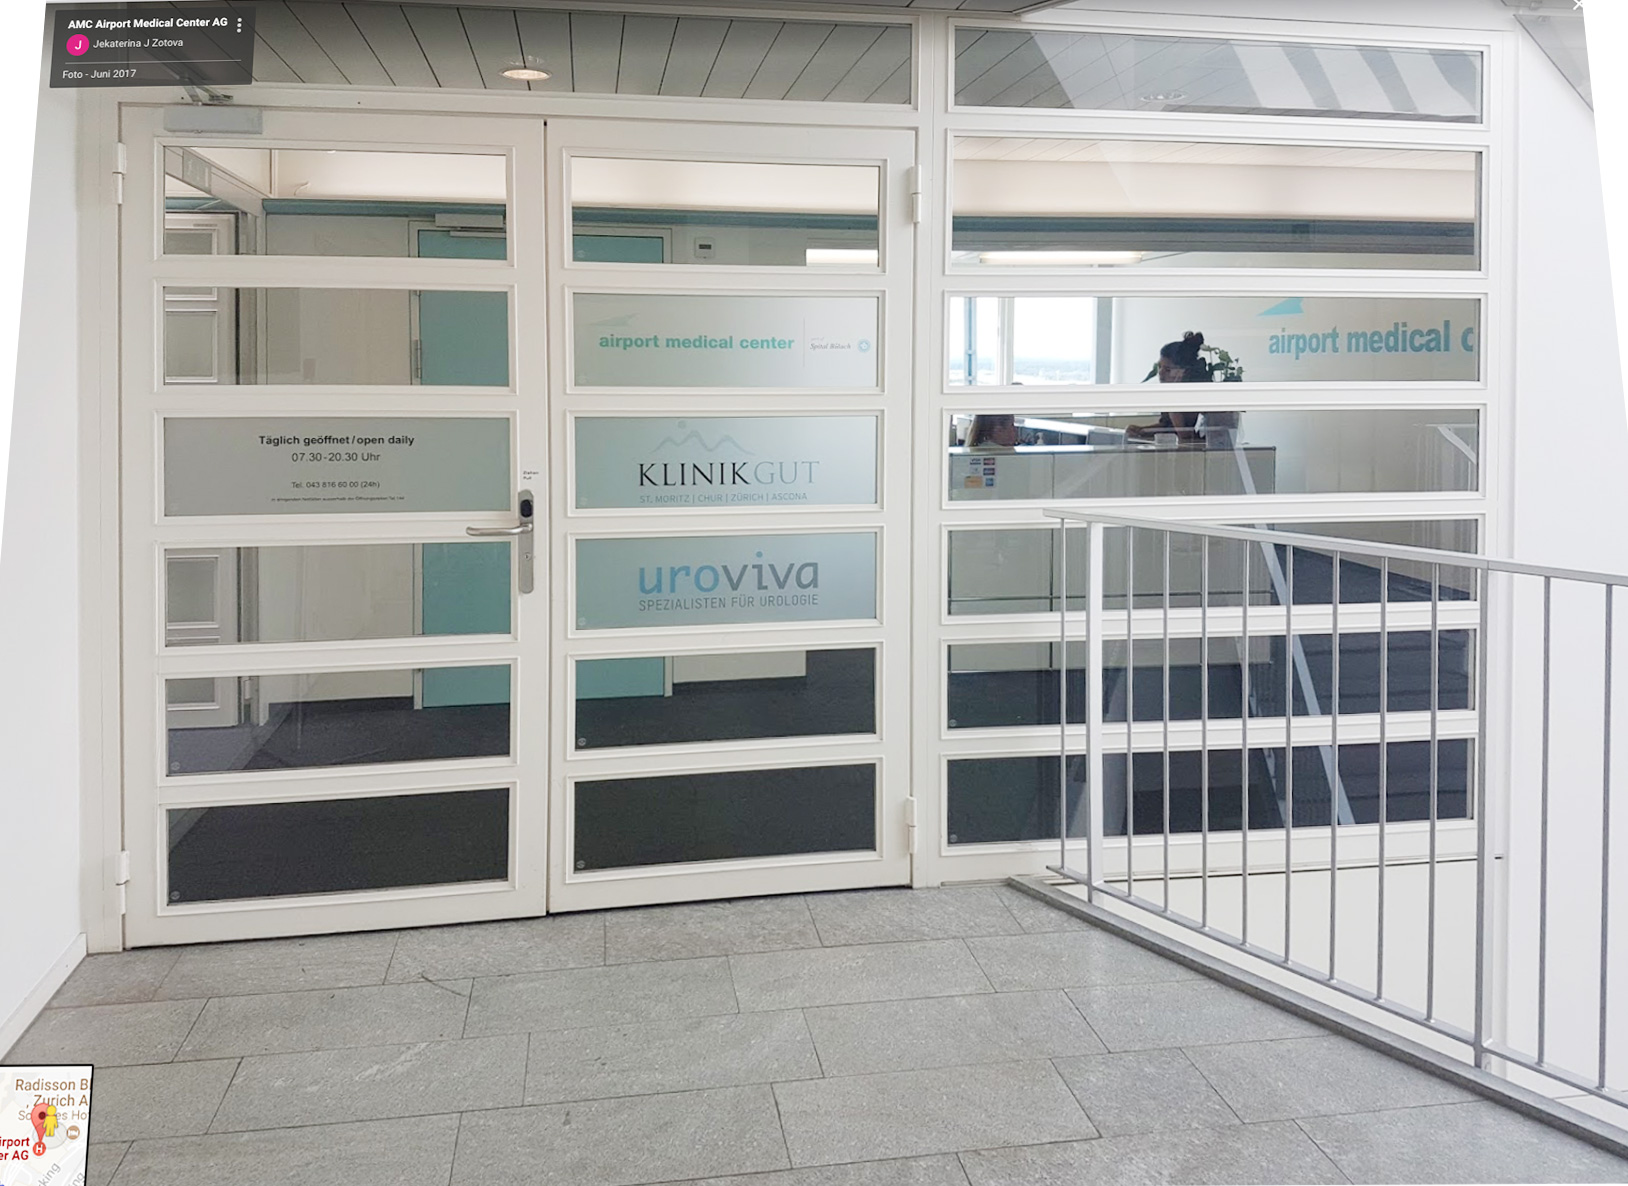 Urology Zurich Airport Medical Centre (Closed)